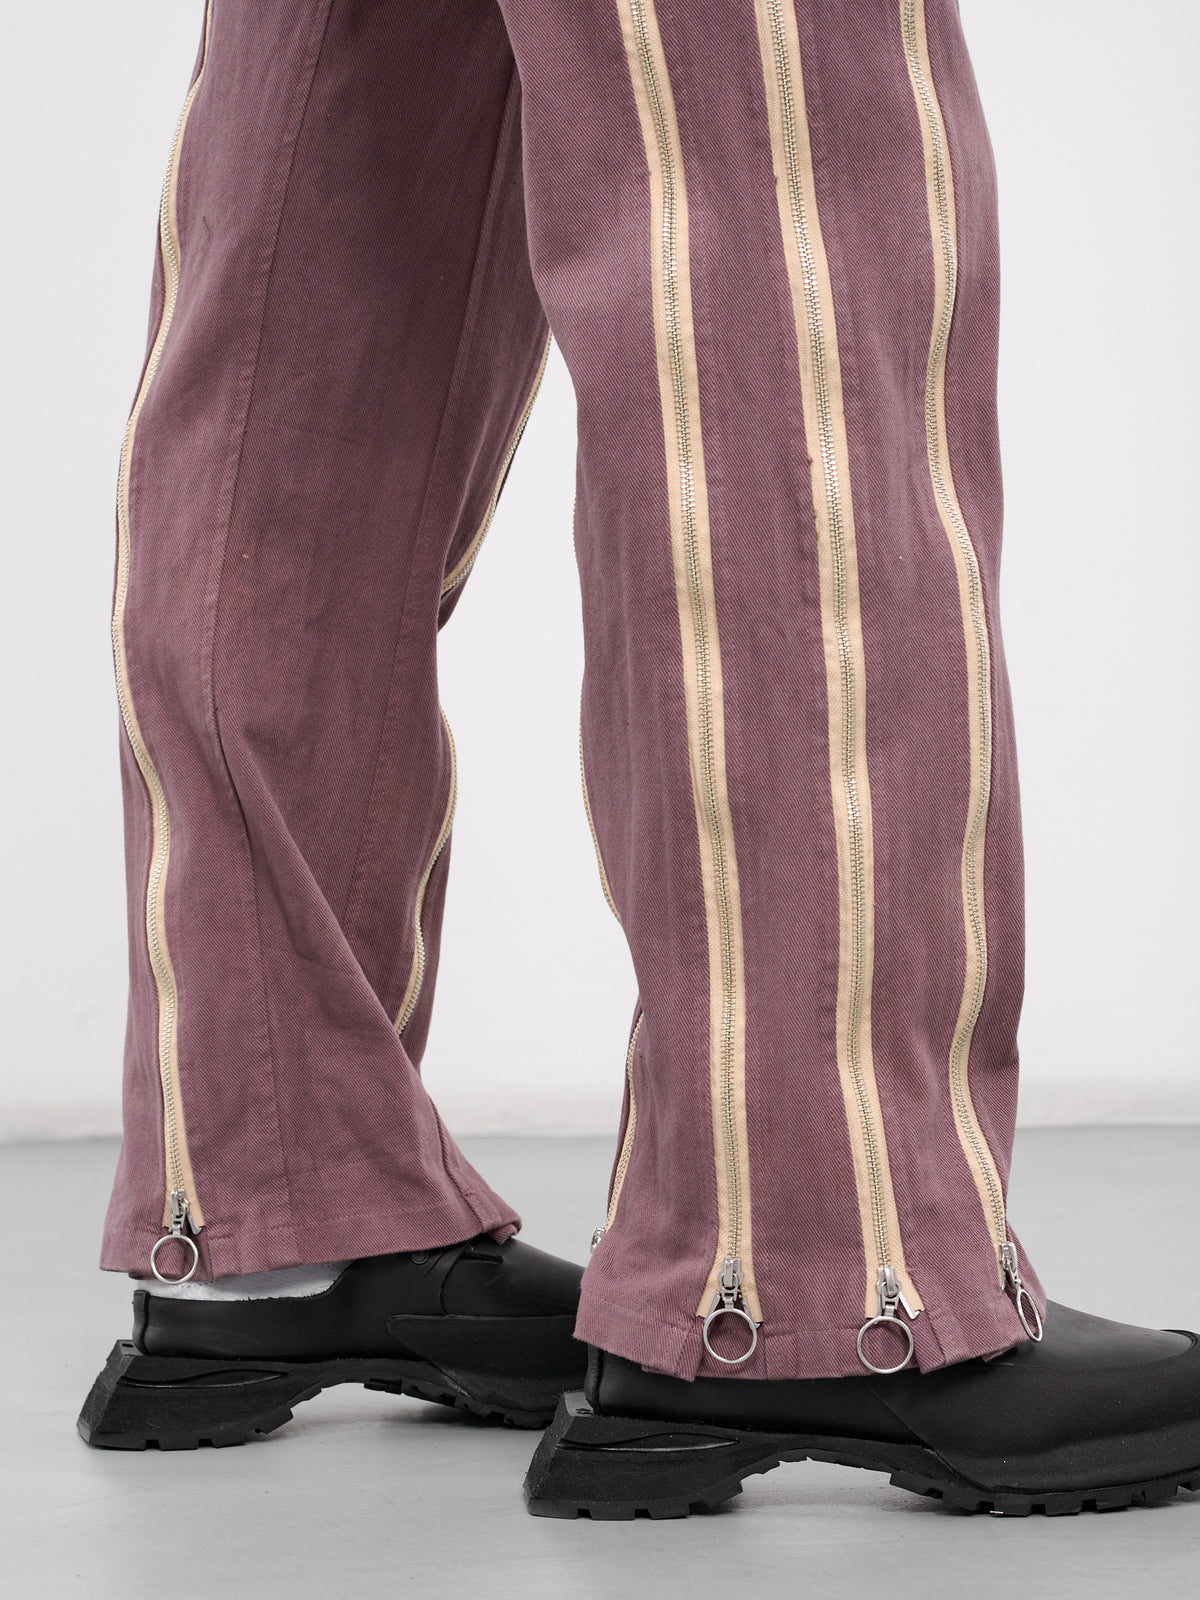 Adjustable Zip Fit Jeans (ADJZIPJEAN-BROWN-GARMENT-DYE)